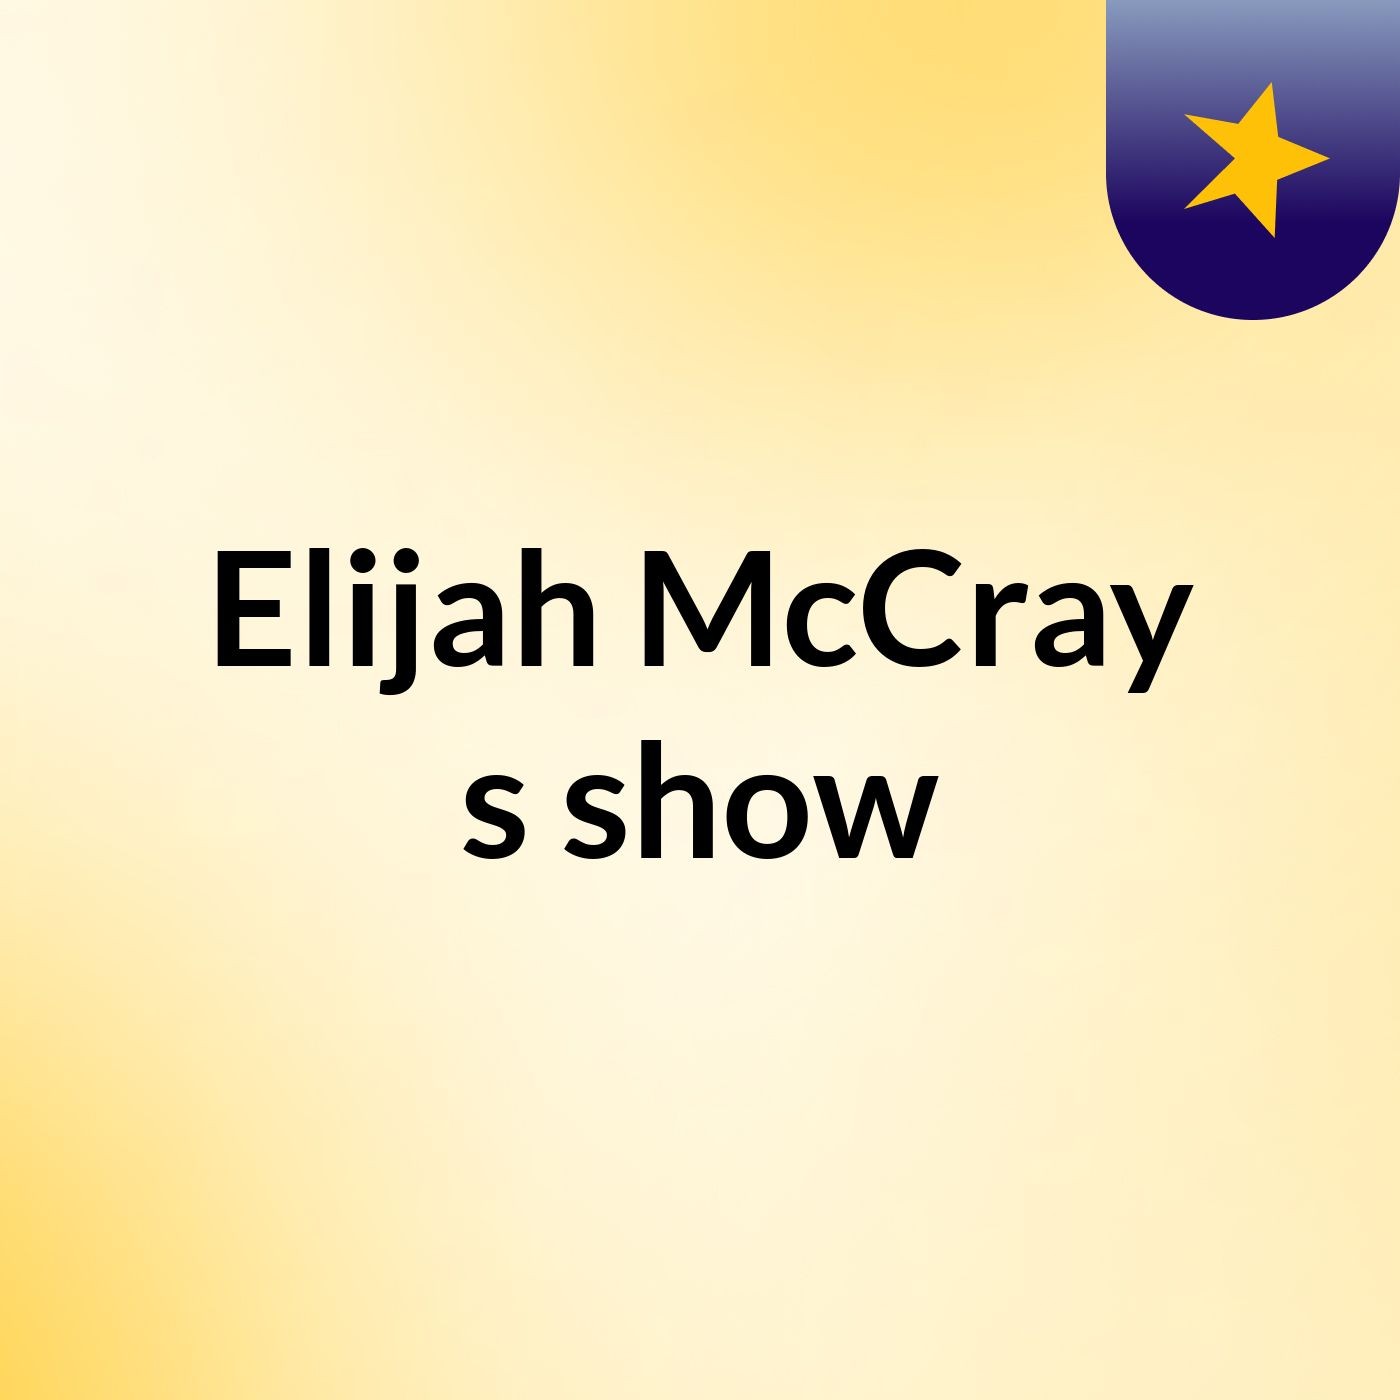 Episode 2 - Elijah McCray's show